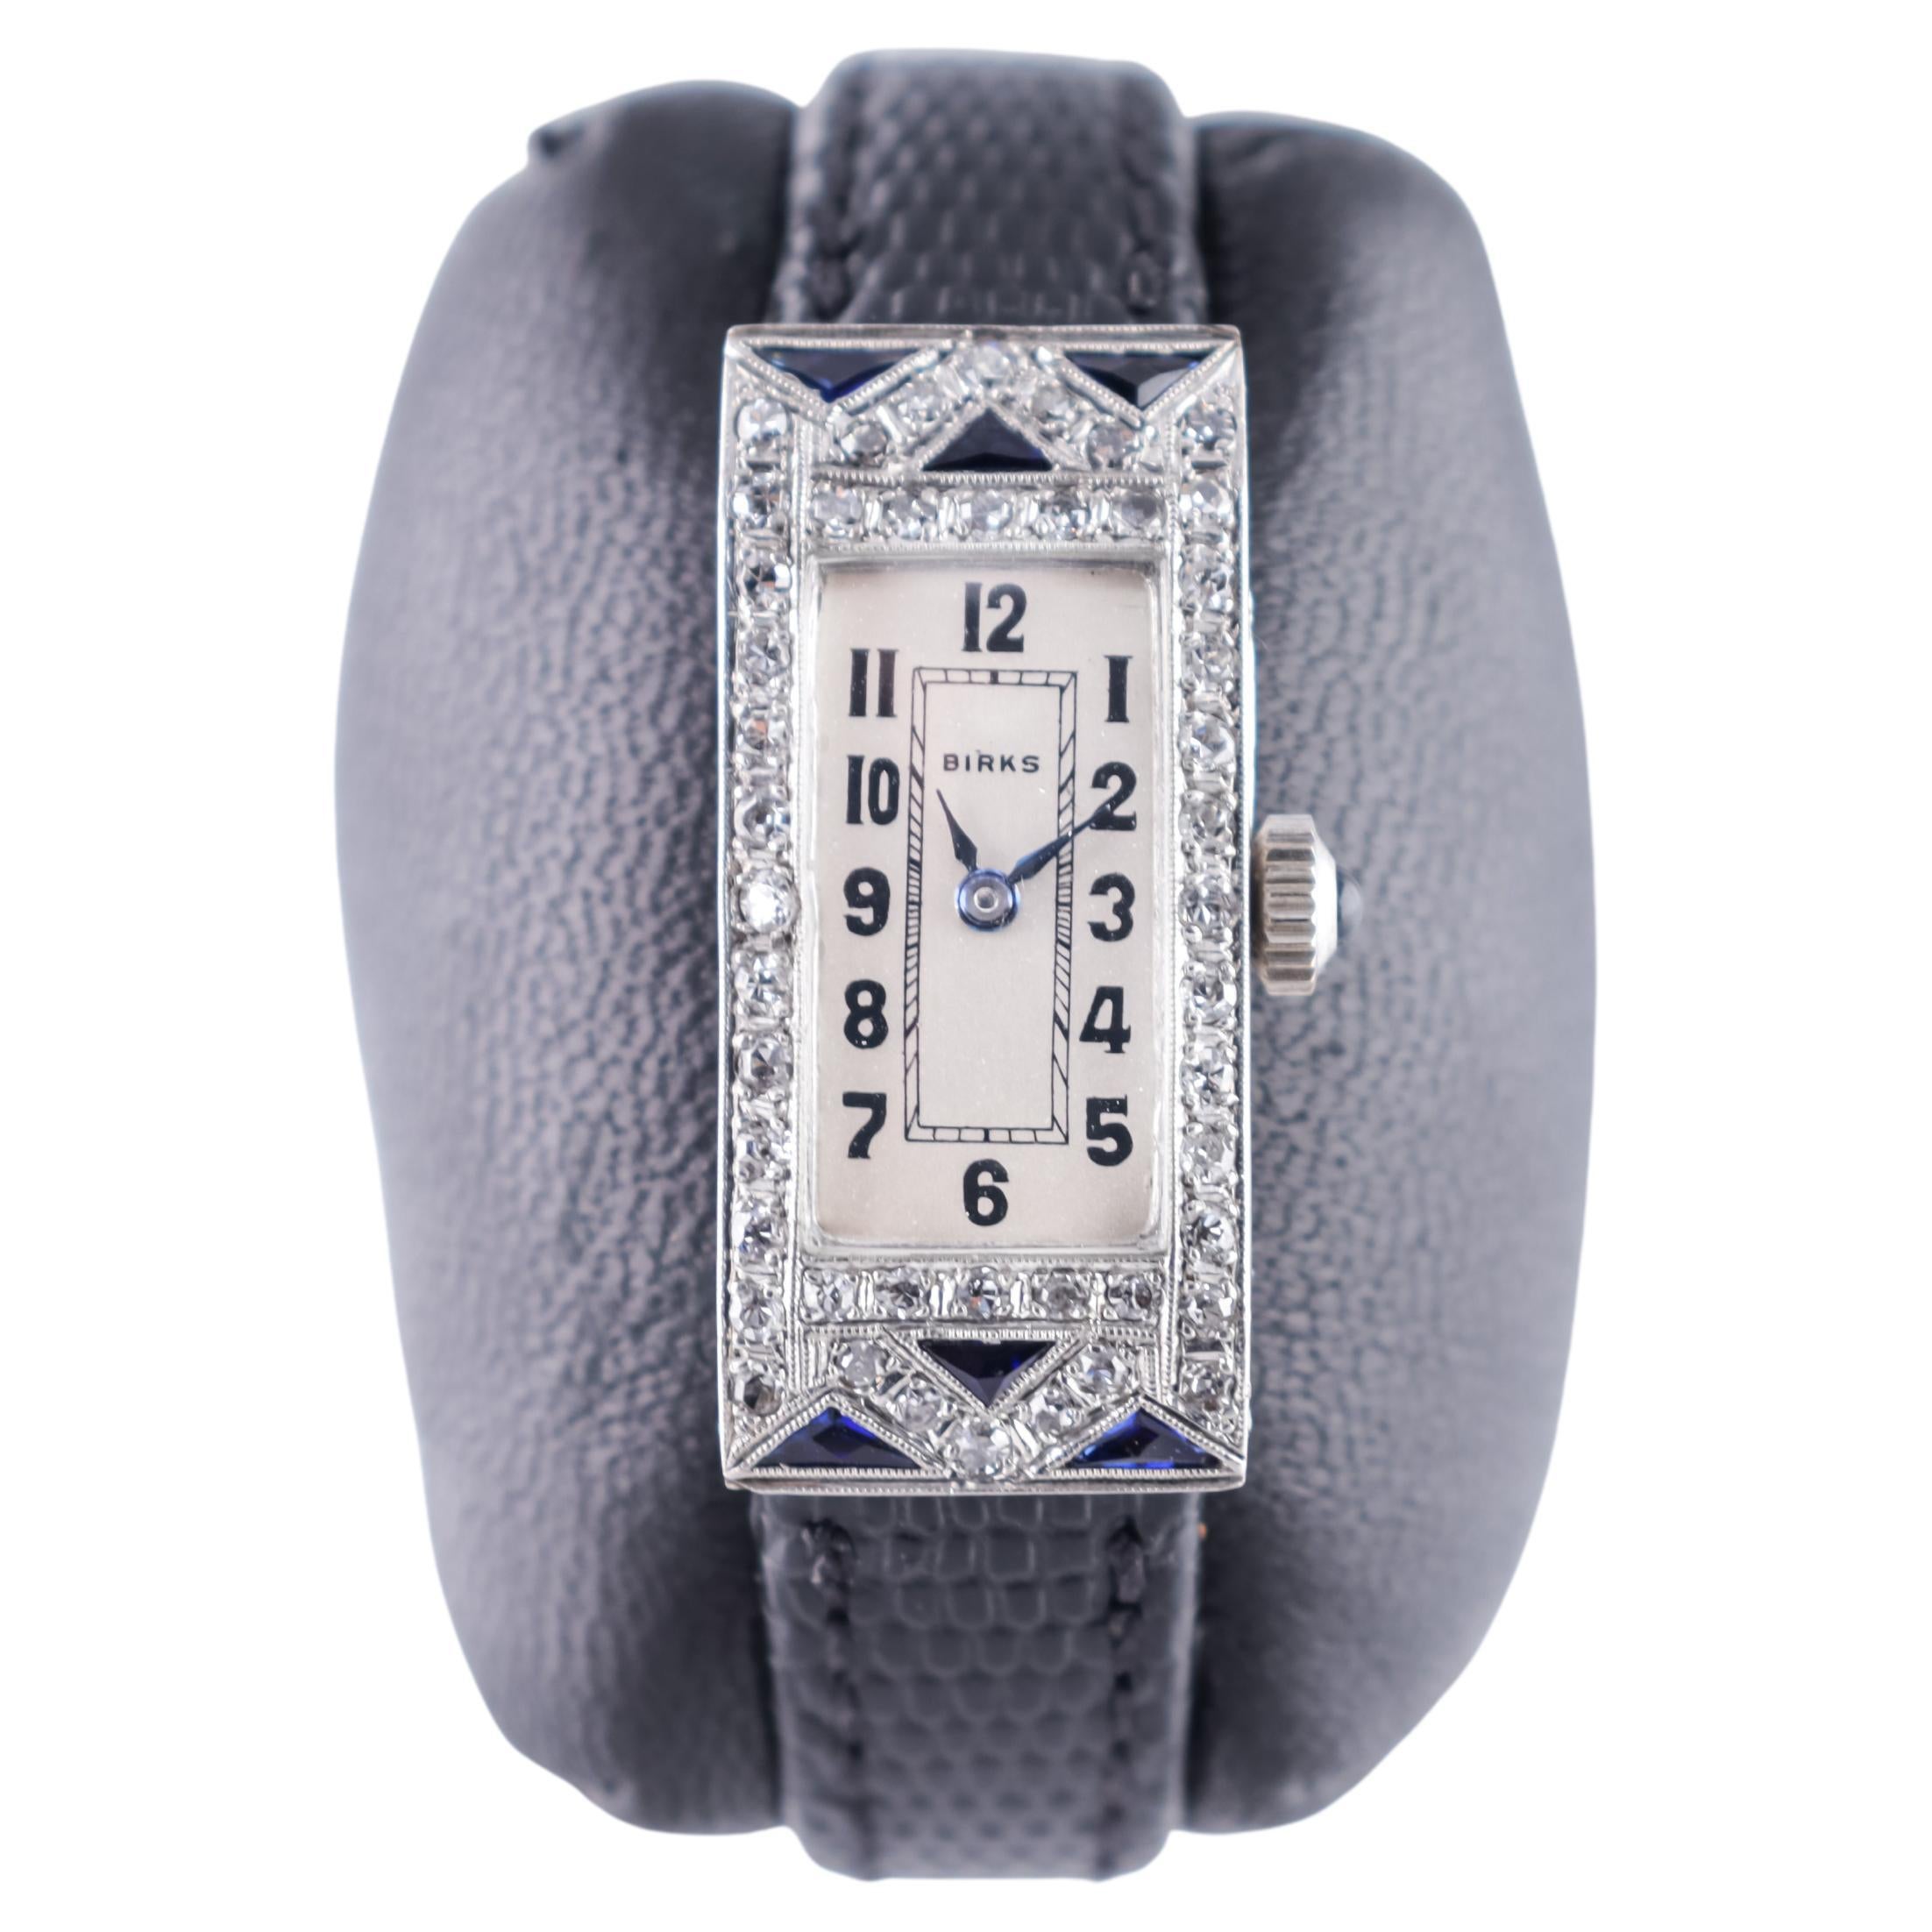 Birks Platinum Art Deco Ladies Diamond and Sapphire Dress Watch from 1940s